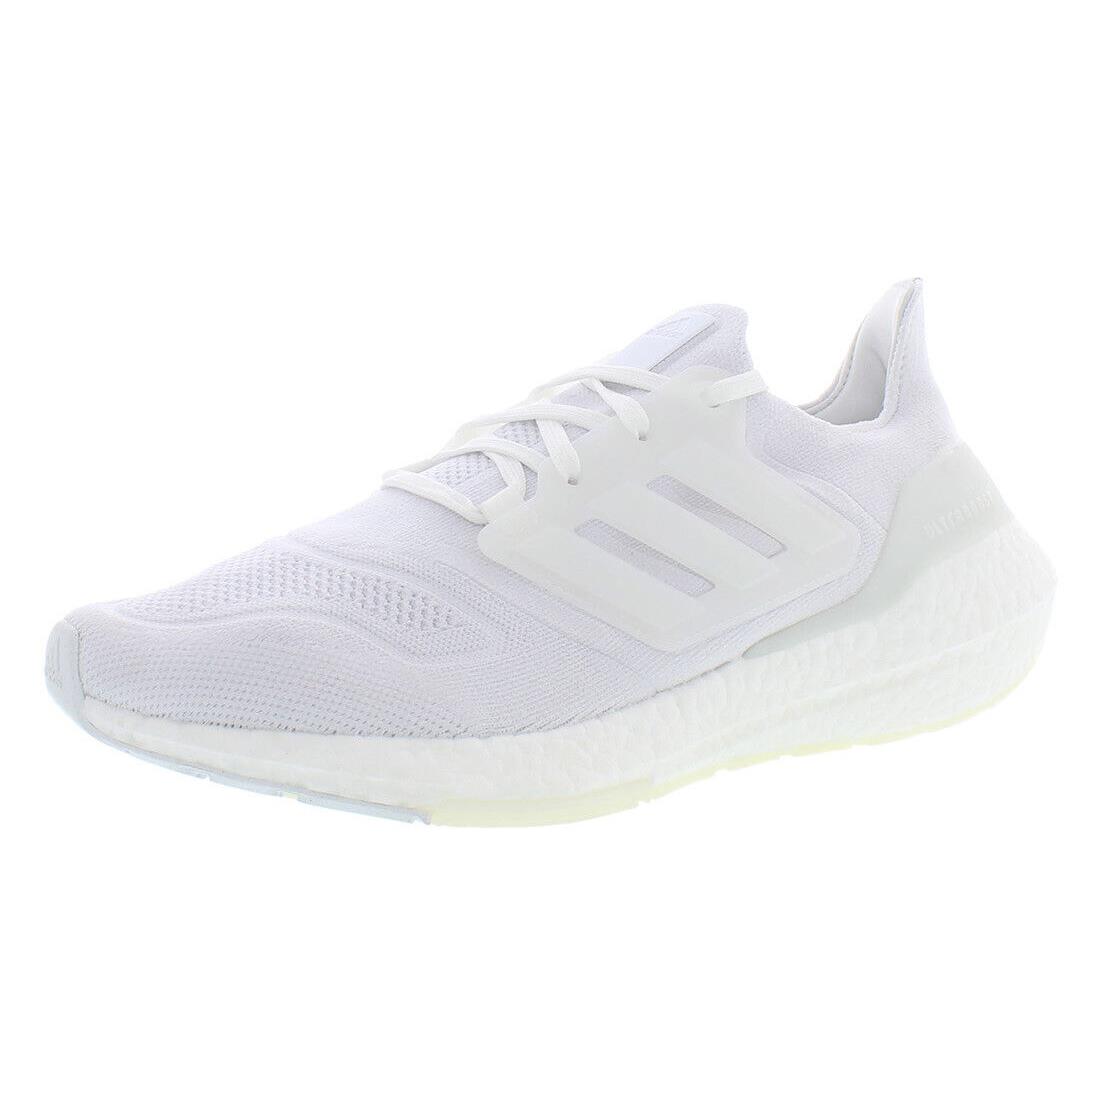 Adidas Ultraboost 22 Mens Shoes - Footwear White/Footwear White/Core Black, Main: White